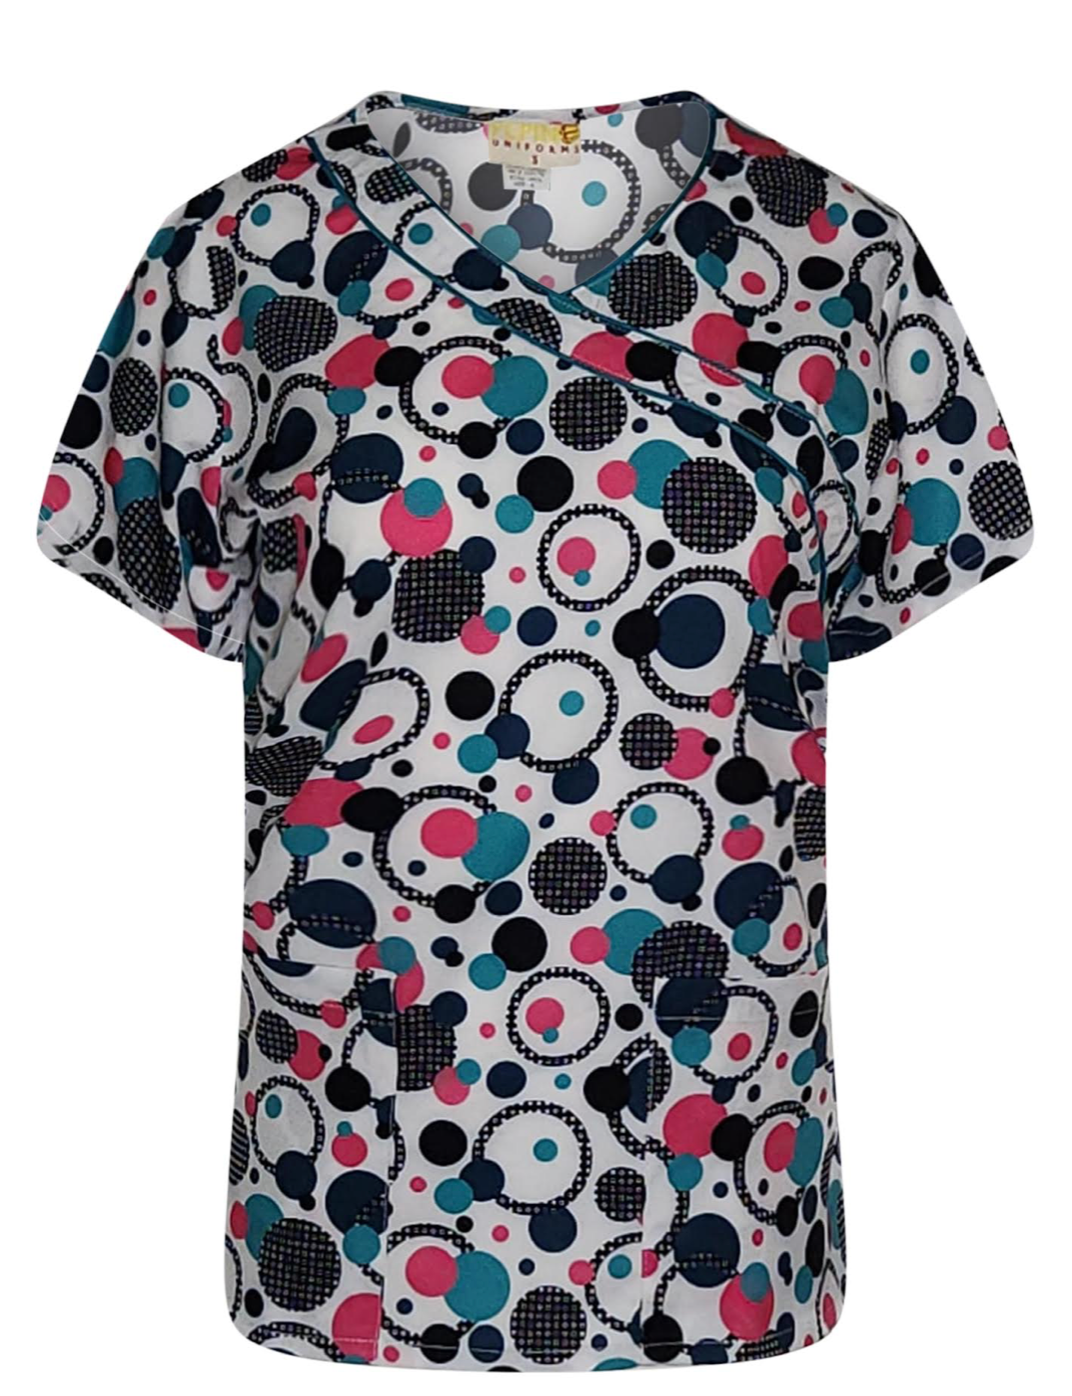 Pepino Uniforms Printed Polka Dot/Teal Mock Wrap Top